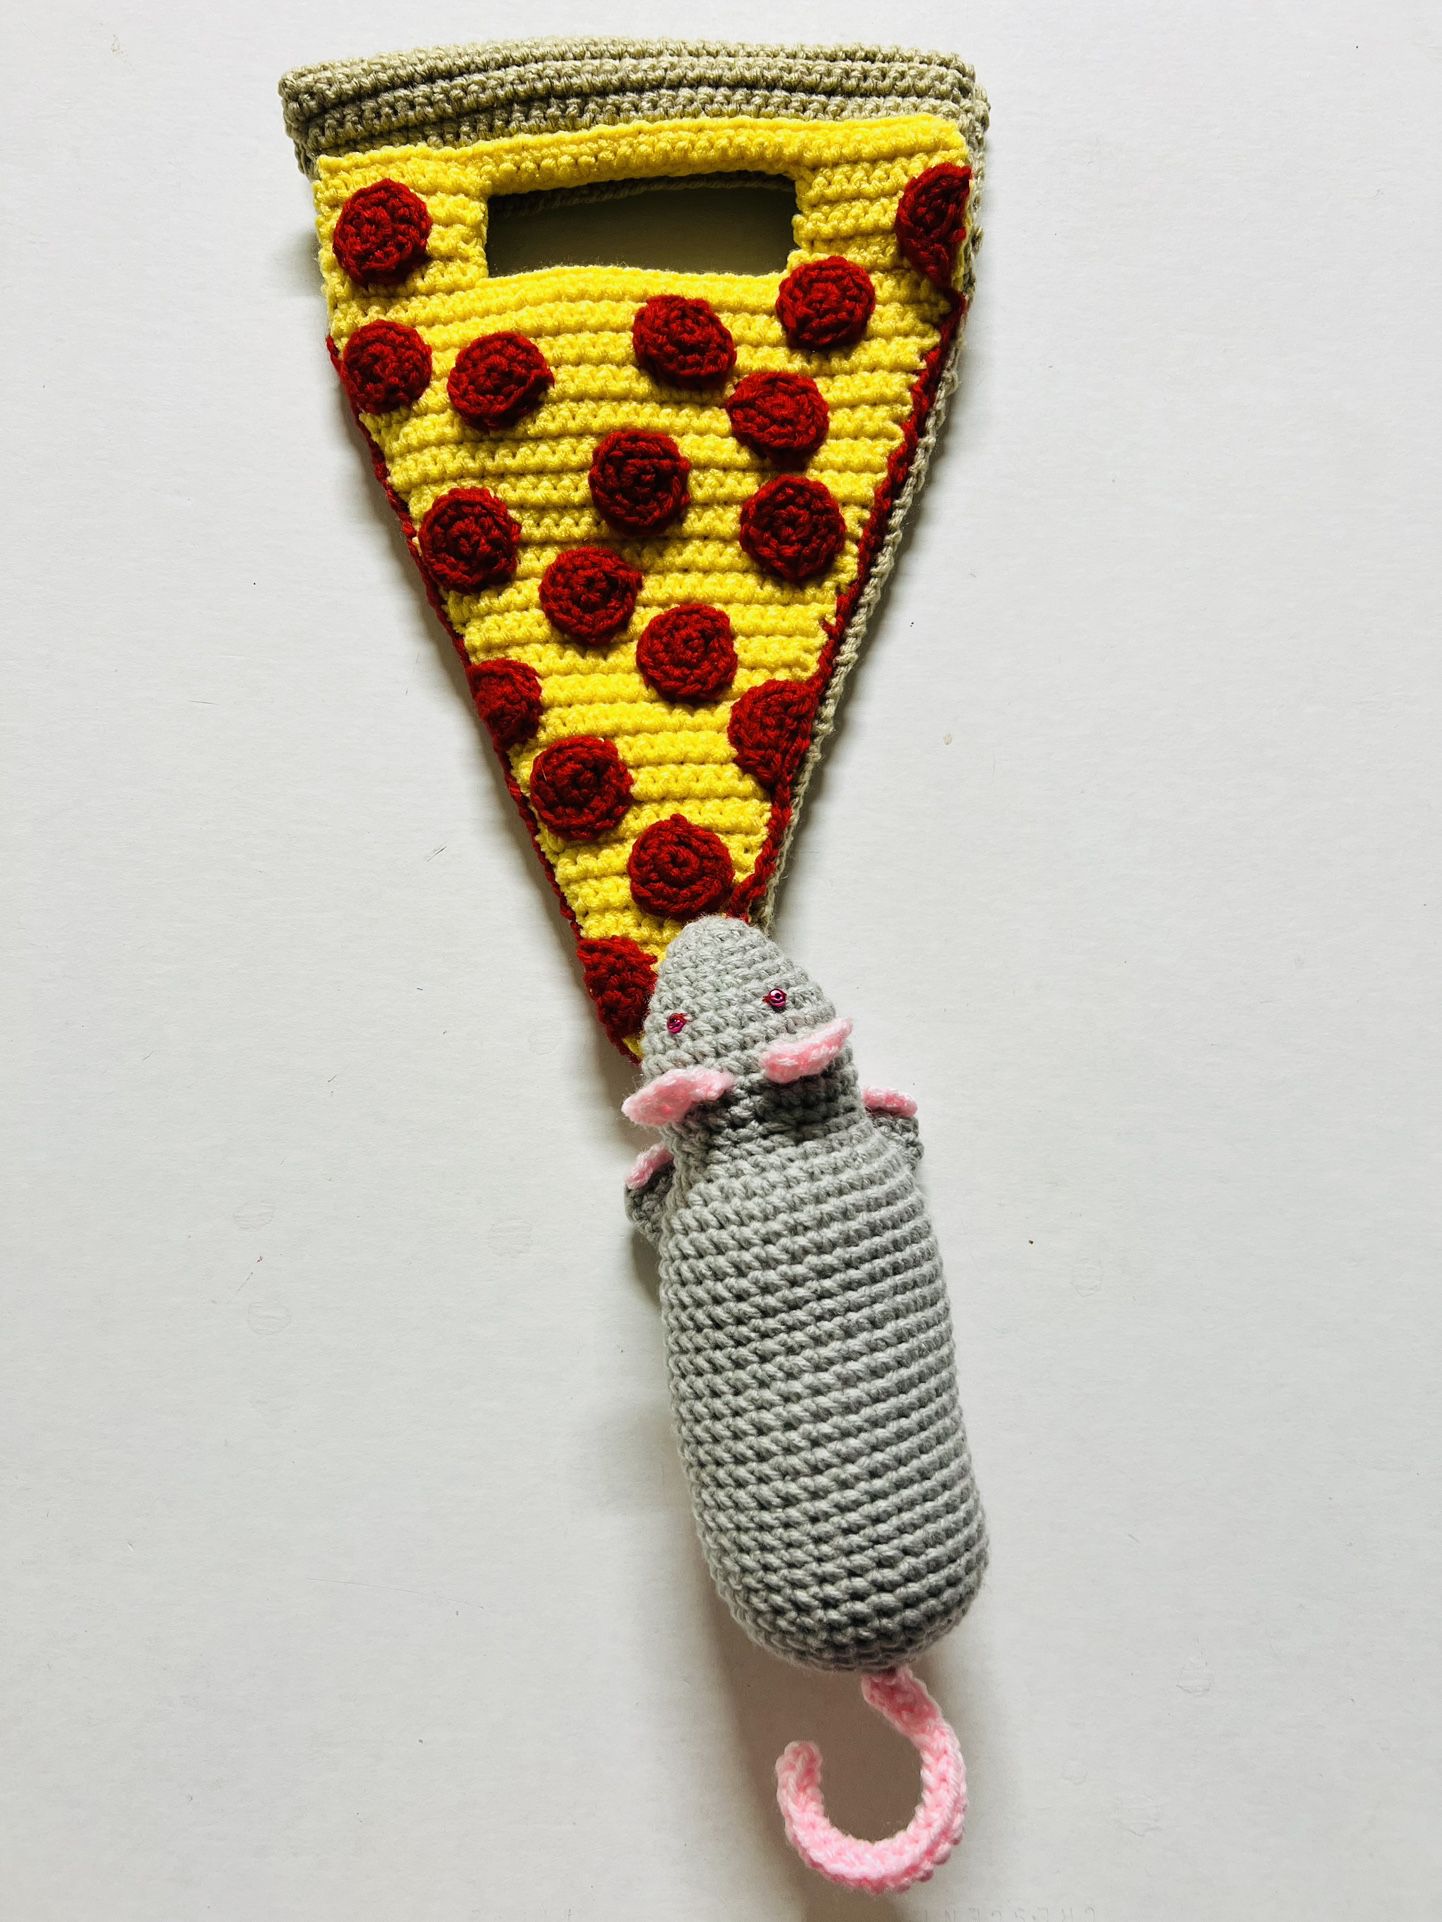 PIZZA Rat New York NYC KnottedNeon Handmade Crochet Clutch Purse bag Wristlet